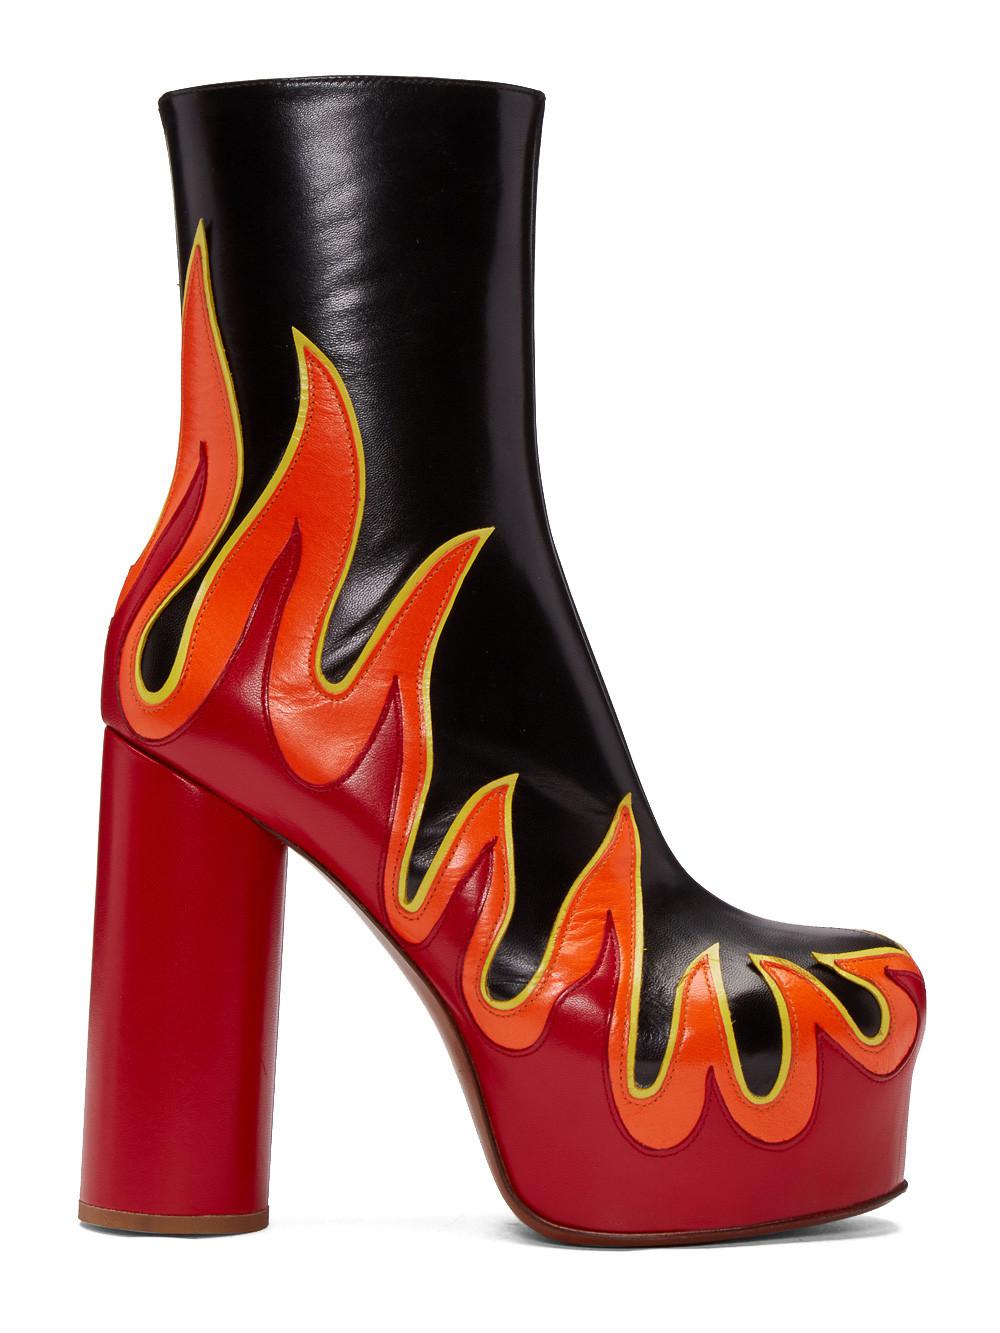 Buy > red flame heels > in stock